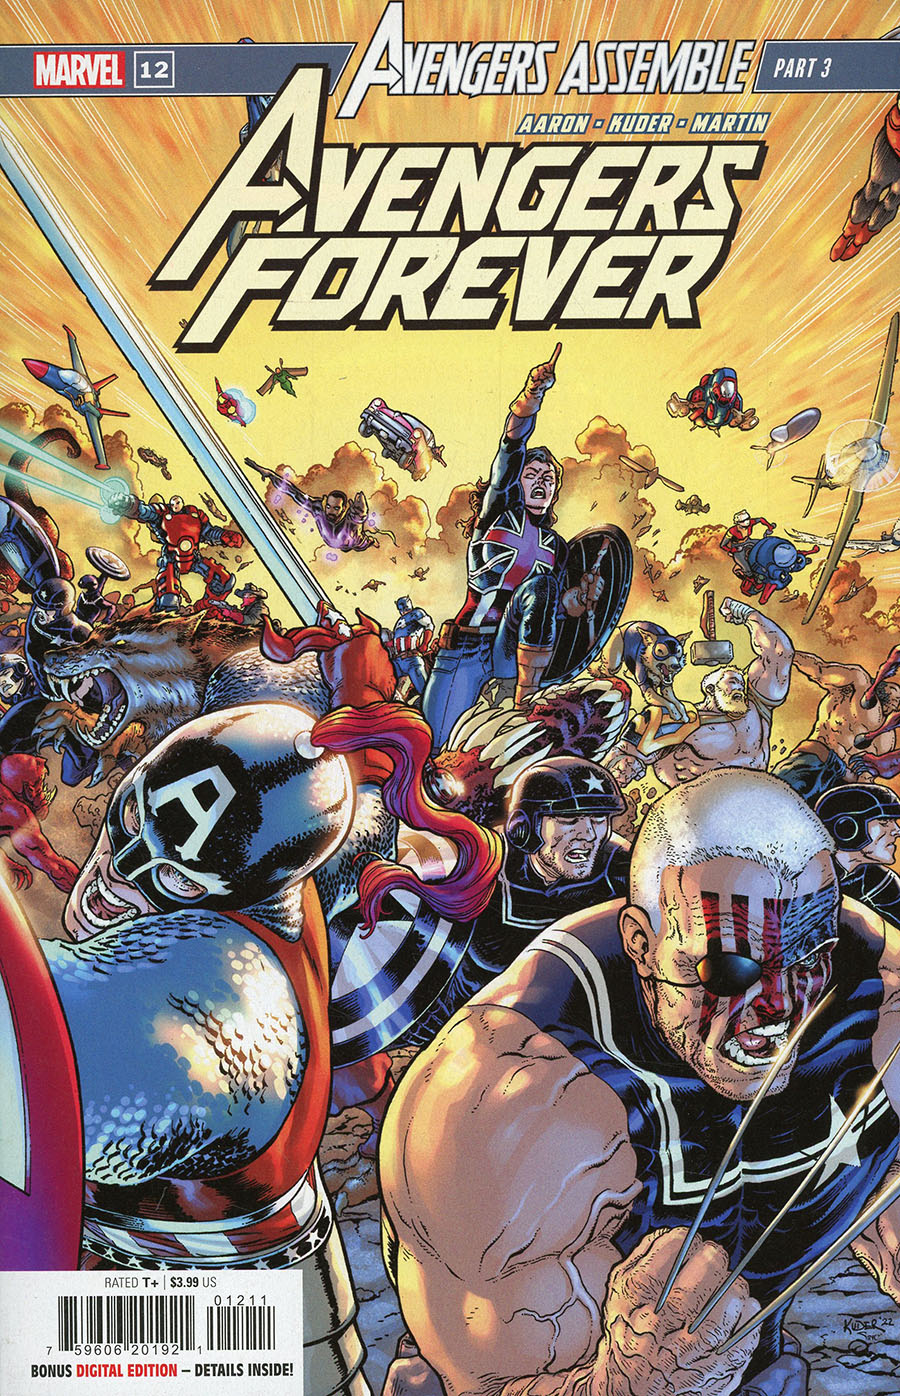 Avengers Forever Vol 2 #12 Cover A Regular Aaron Kuder Cover (Avengers Assemble Part 3)